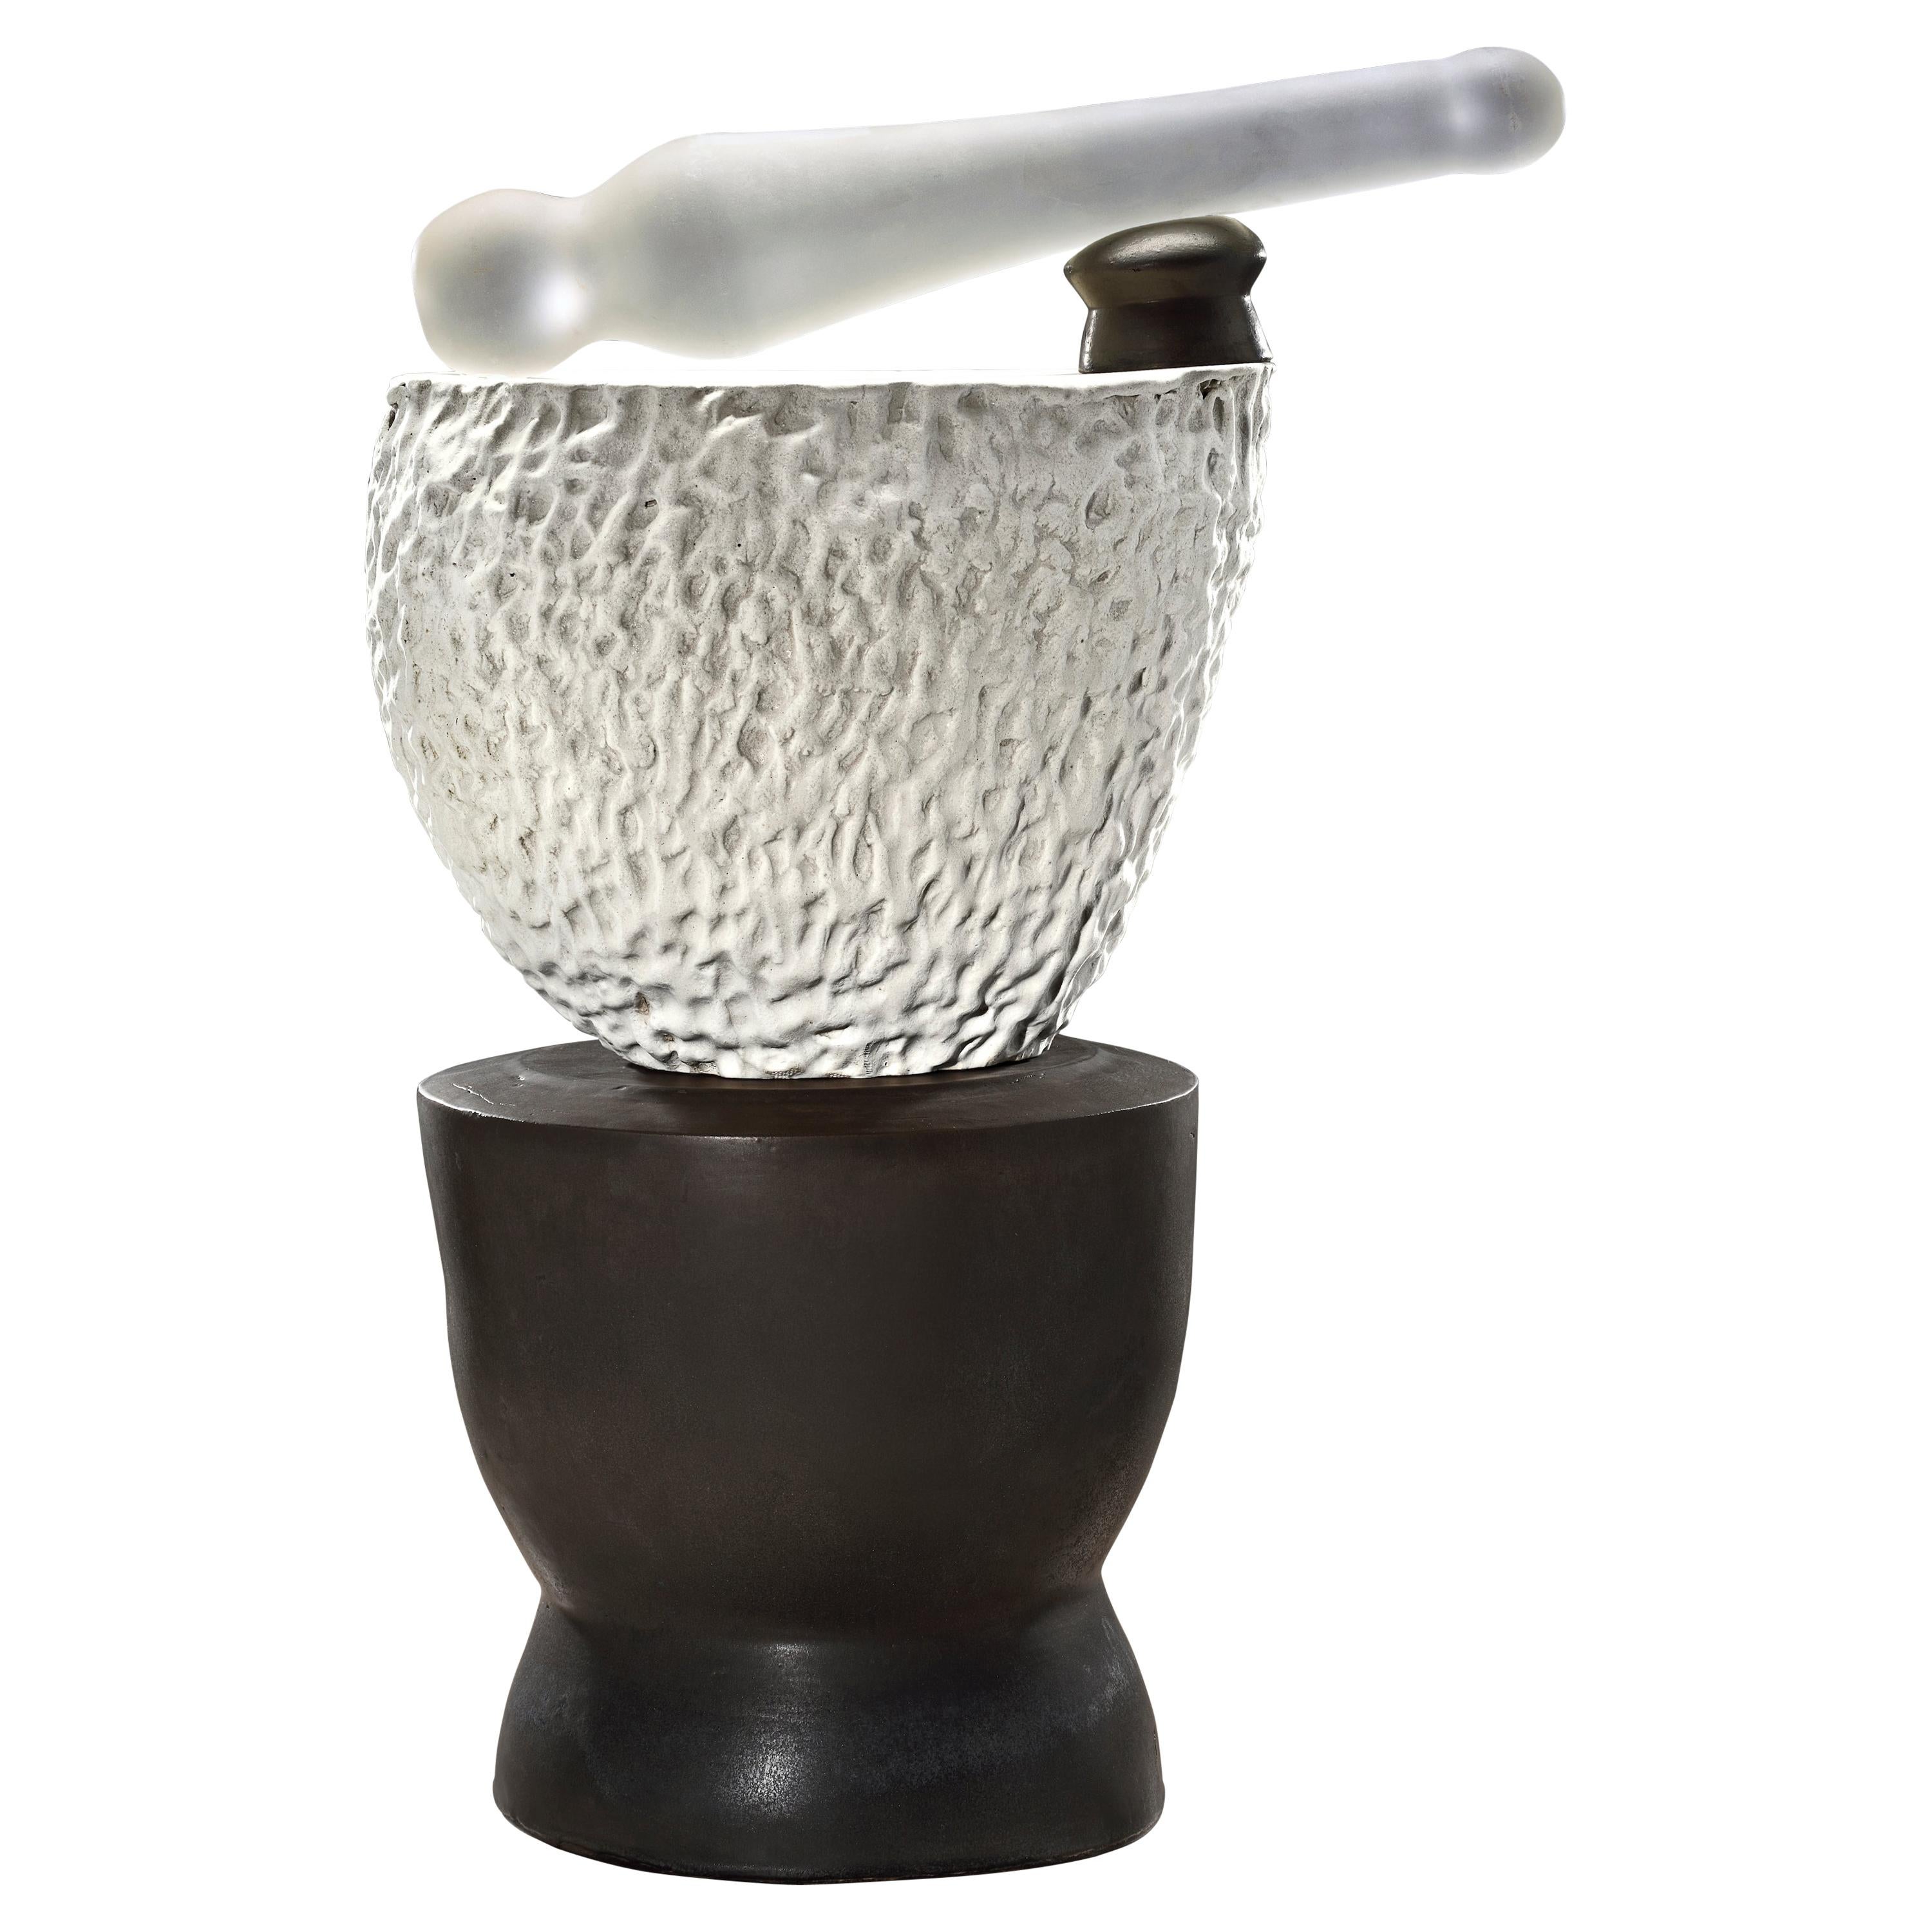 Richard Hirsch Ceramic Mortar and Glass Pestle Sculpture #5, 2020